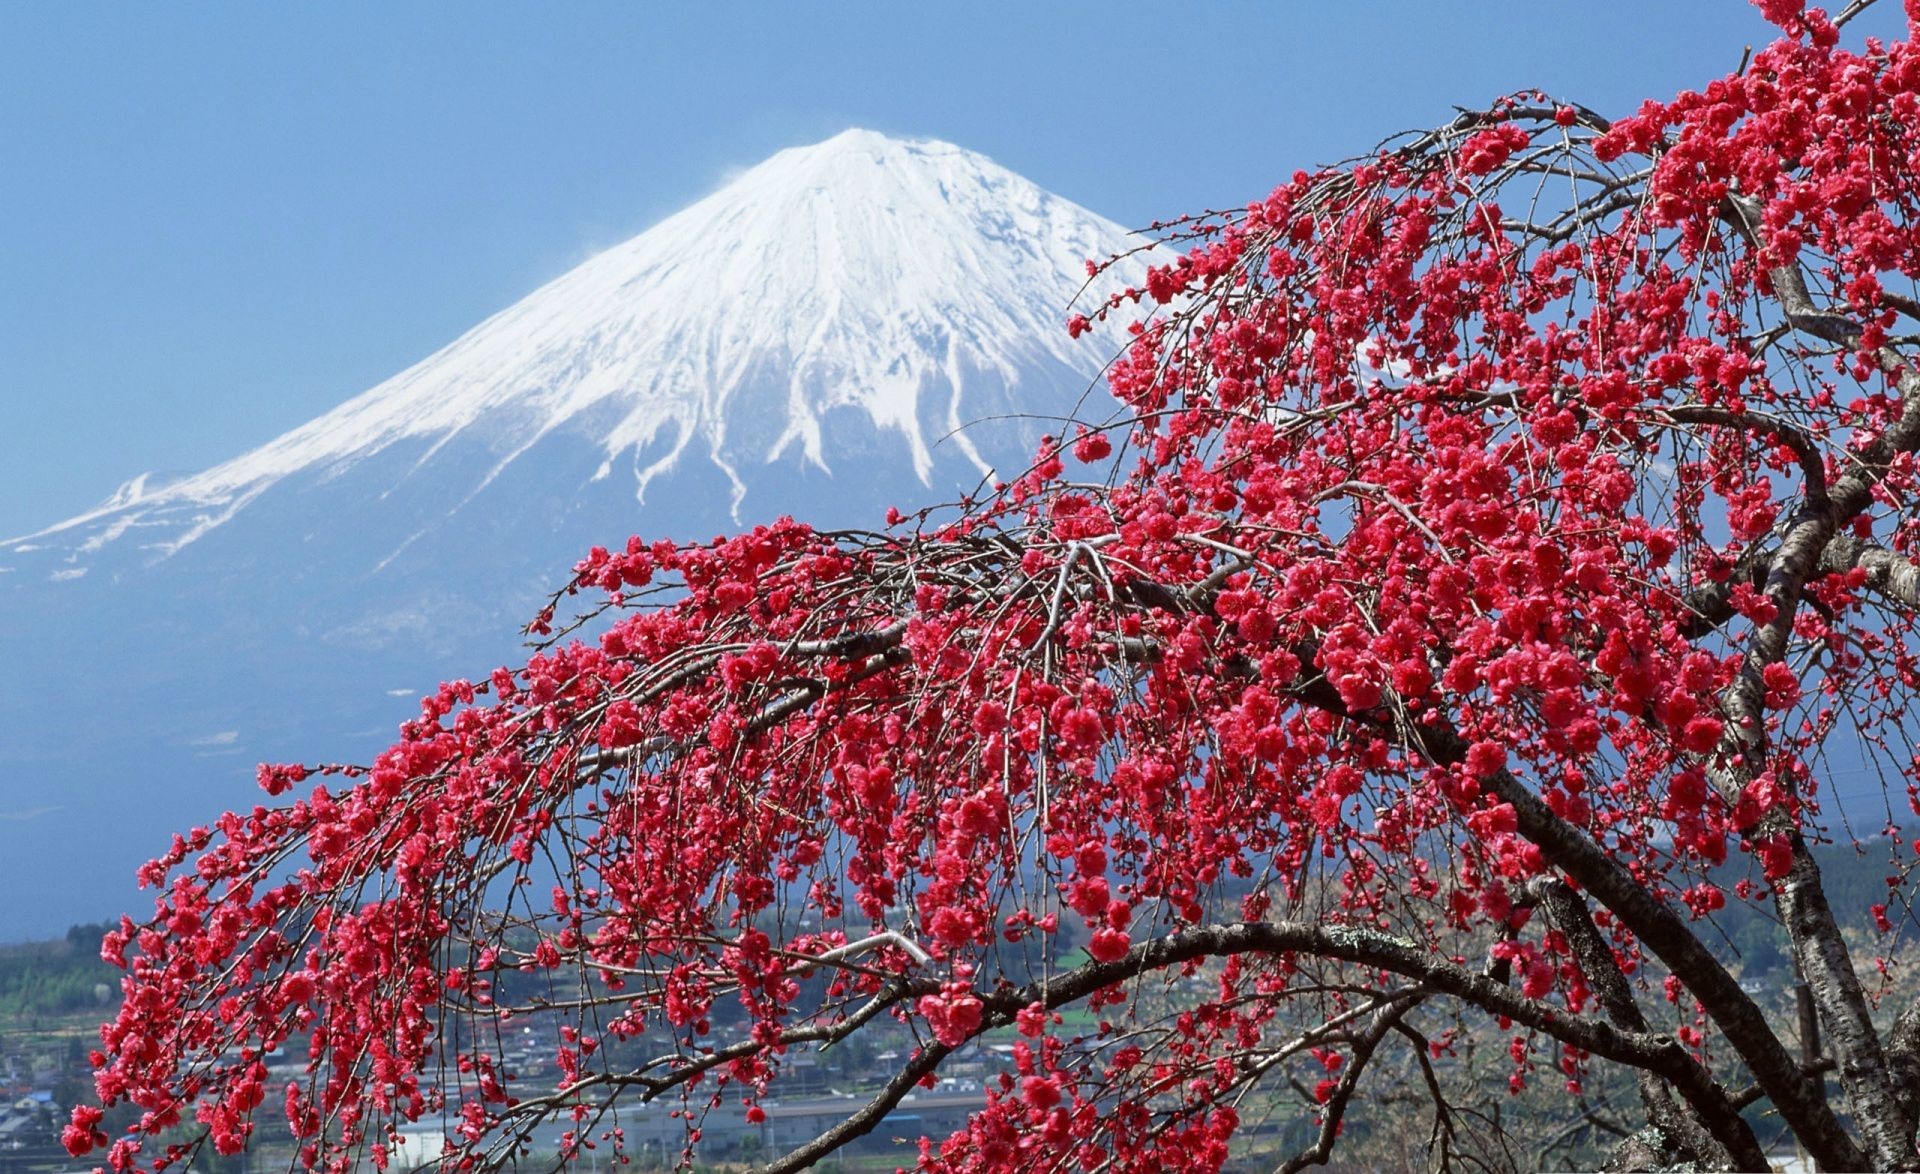 Mount Fuji (Japan)